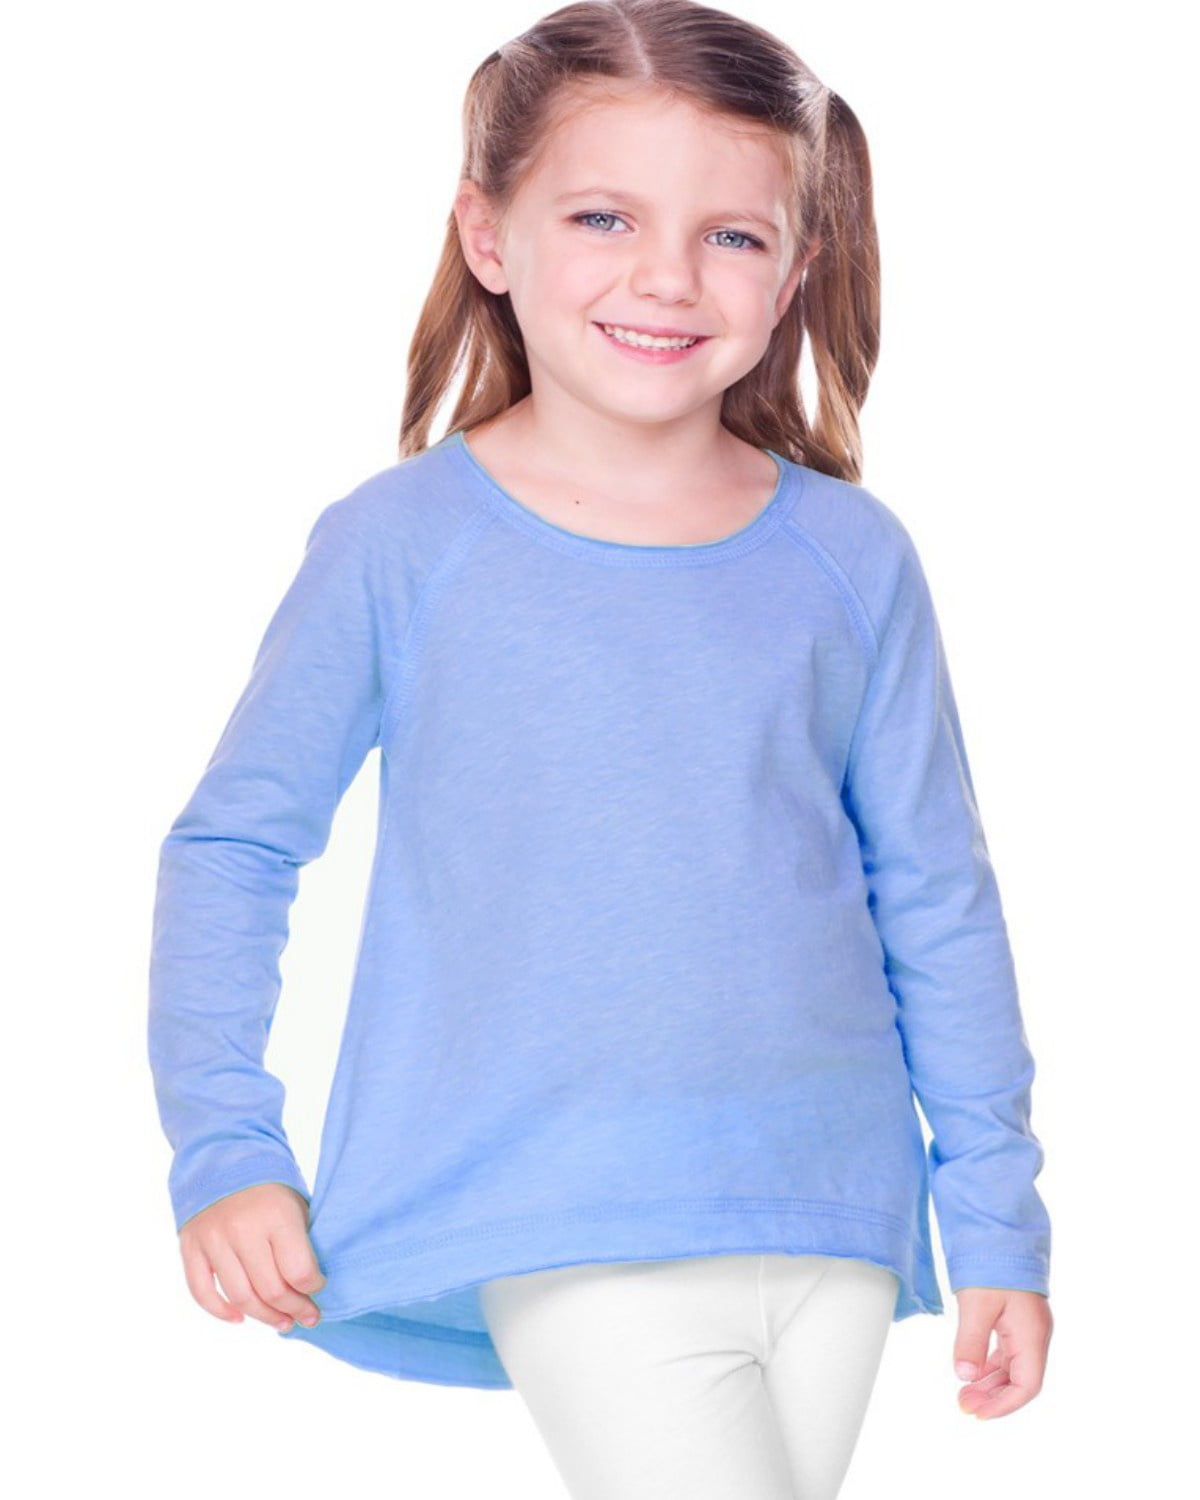 THE BEATLES t-shirt model:5 clothing toddler kid toddler children size:1-8 y 